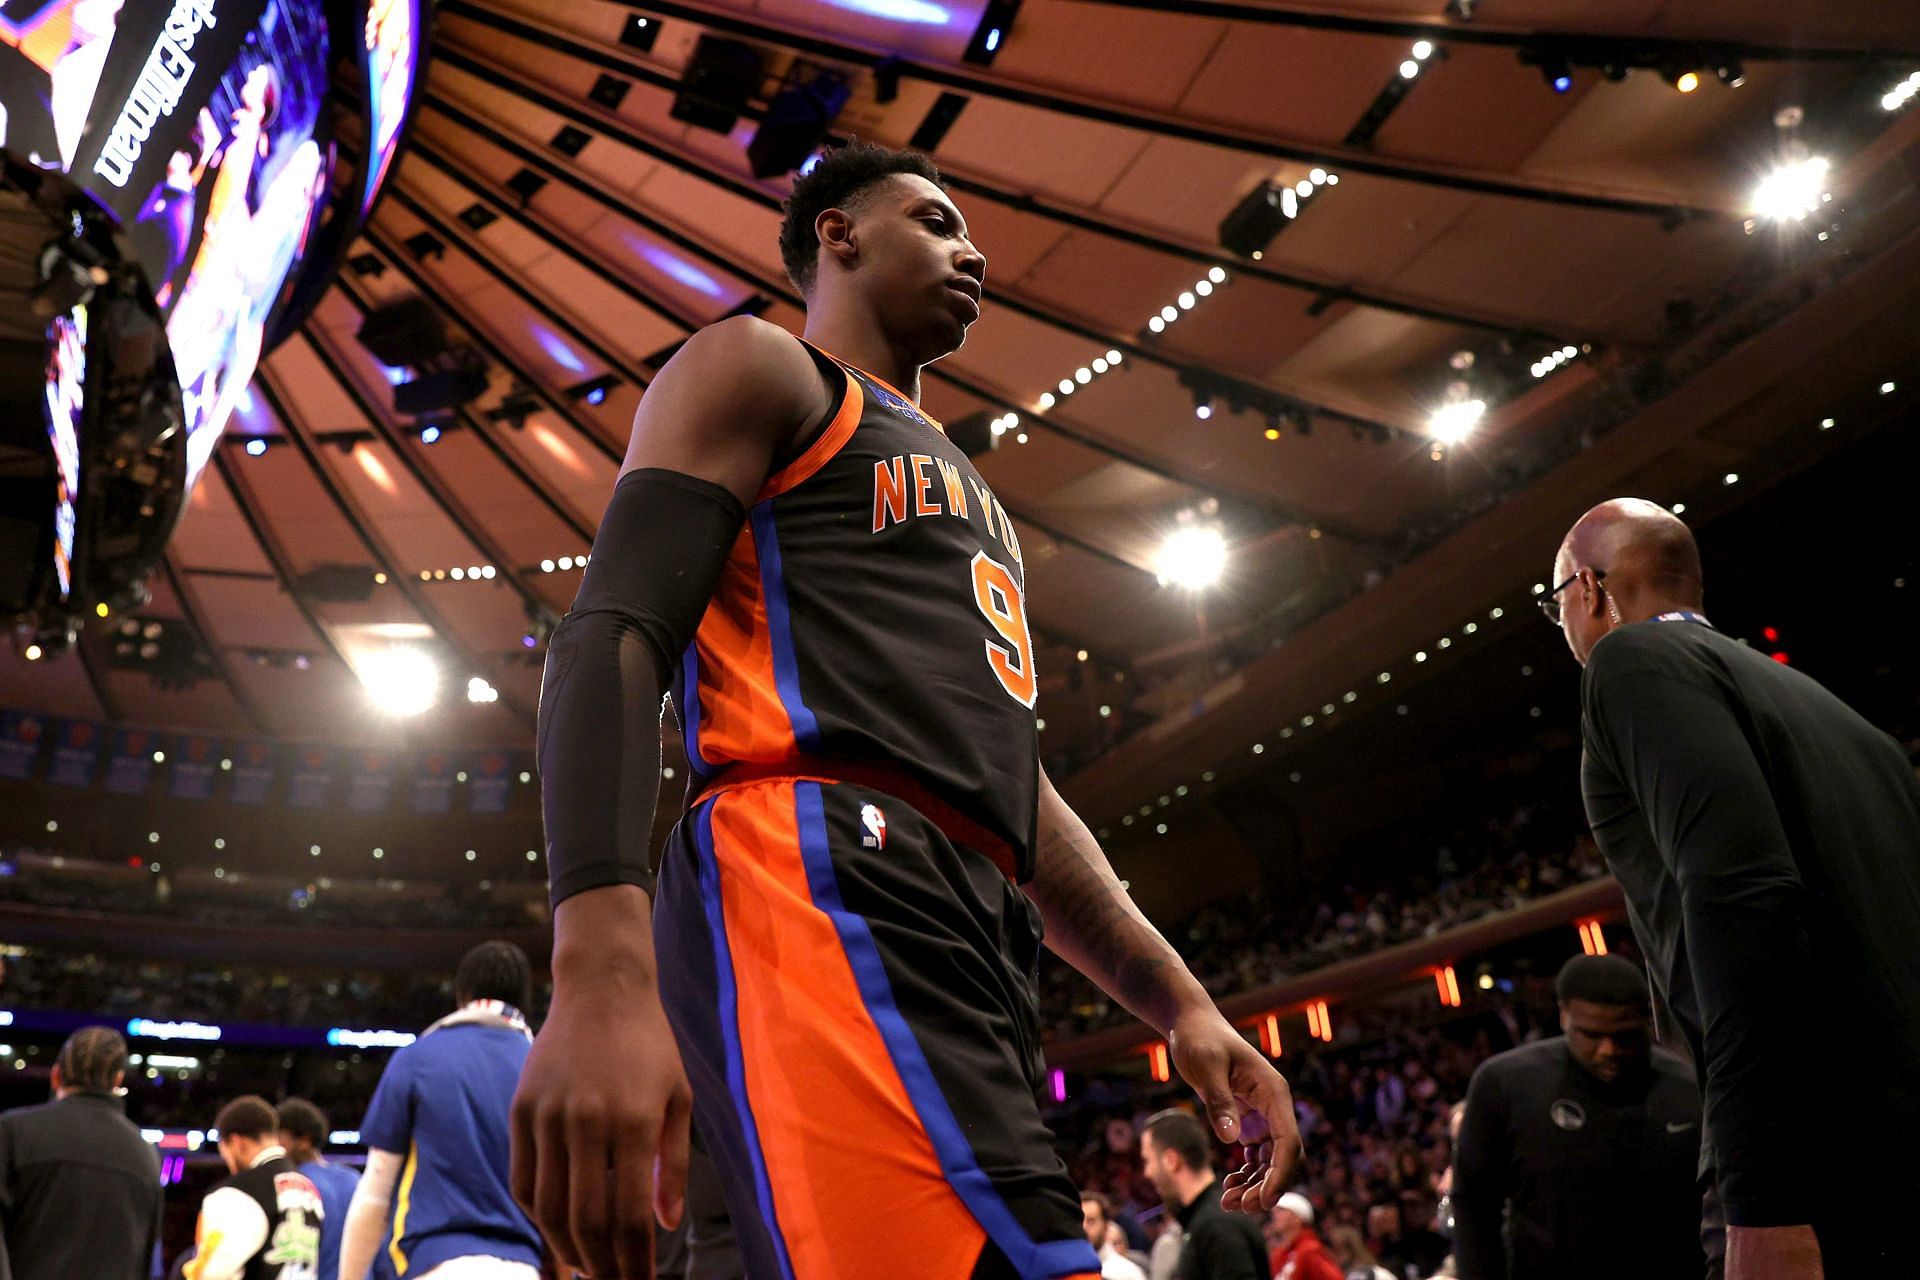 RJ Barrett will not play tonight for the New York Knicks.